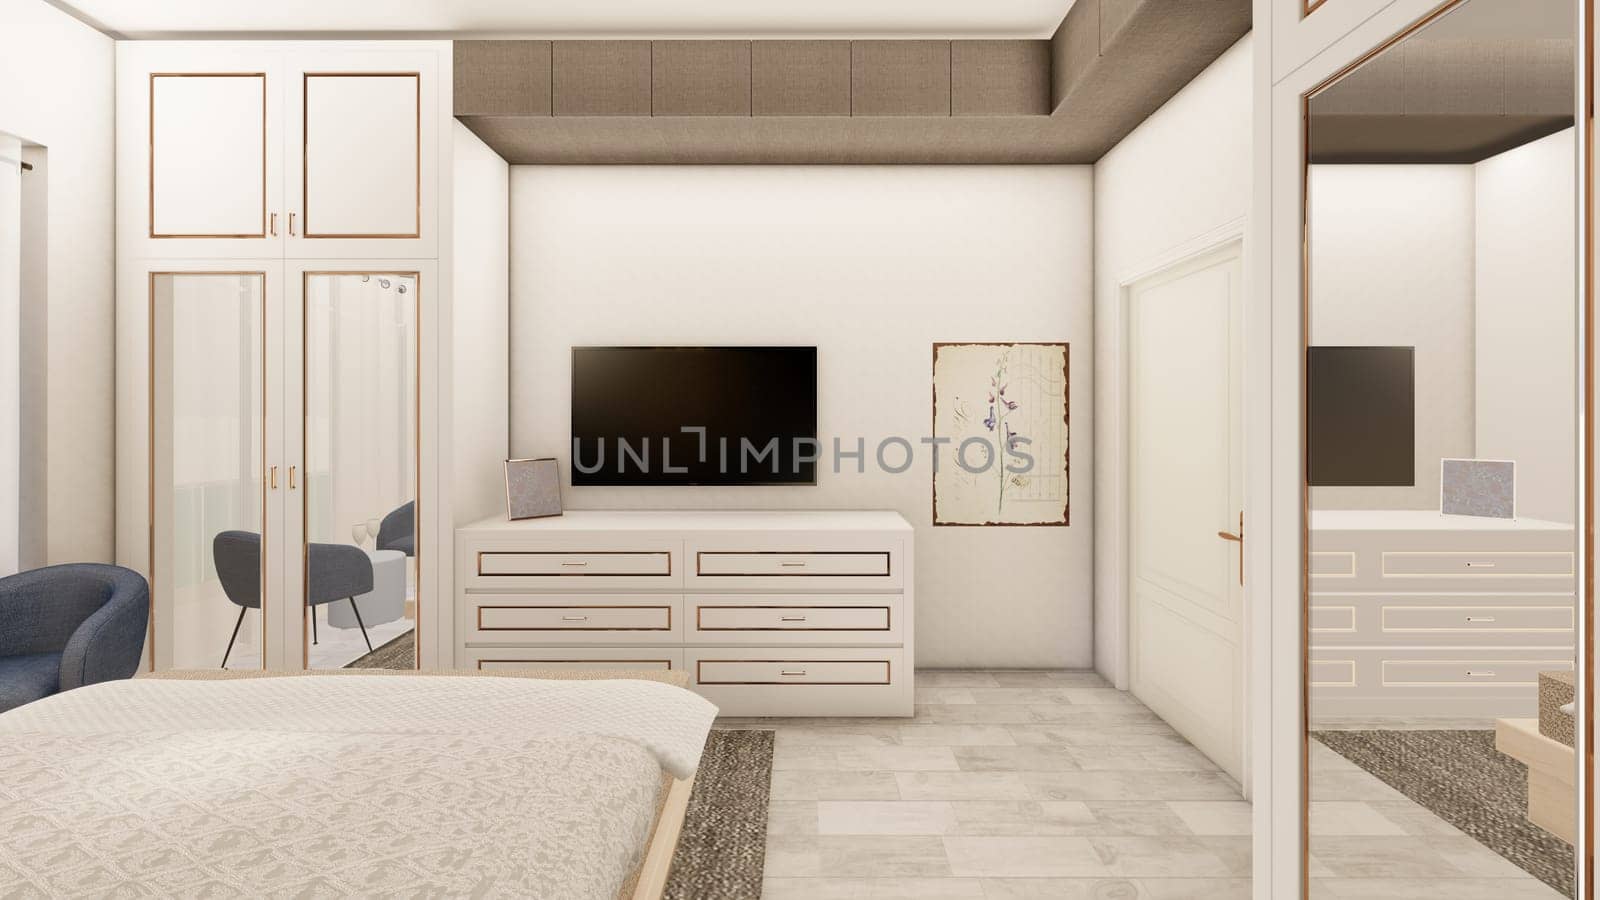 Realistic bedroom interior design with wooden furniture 3d rendering